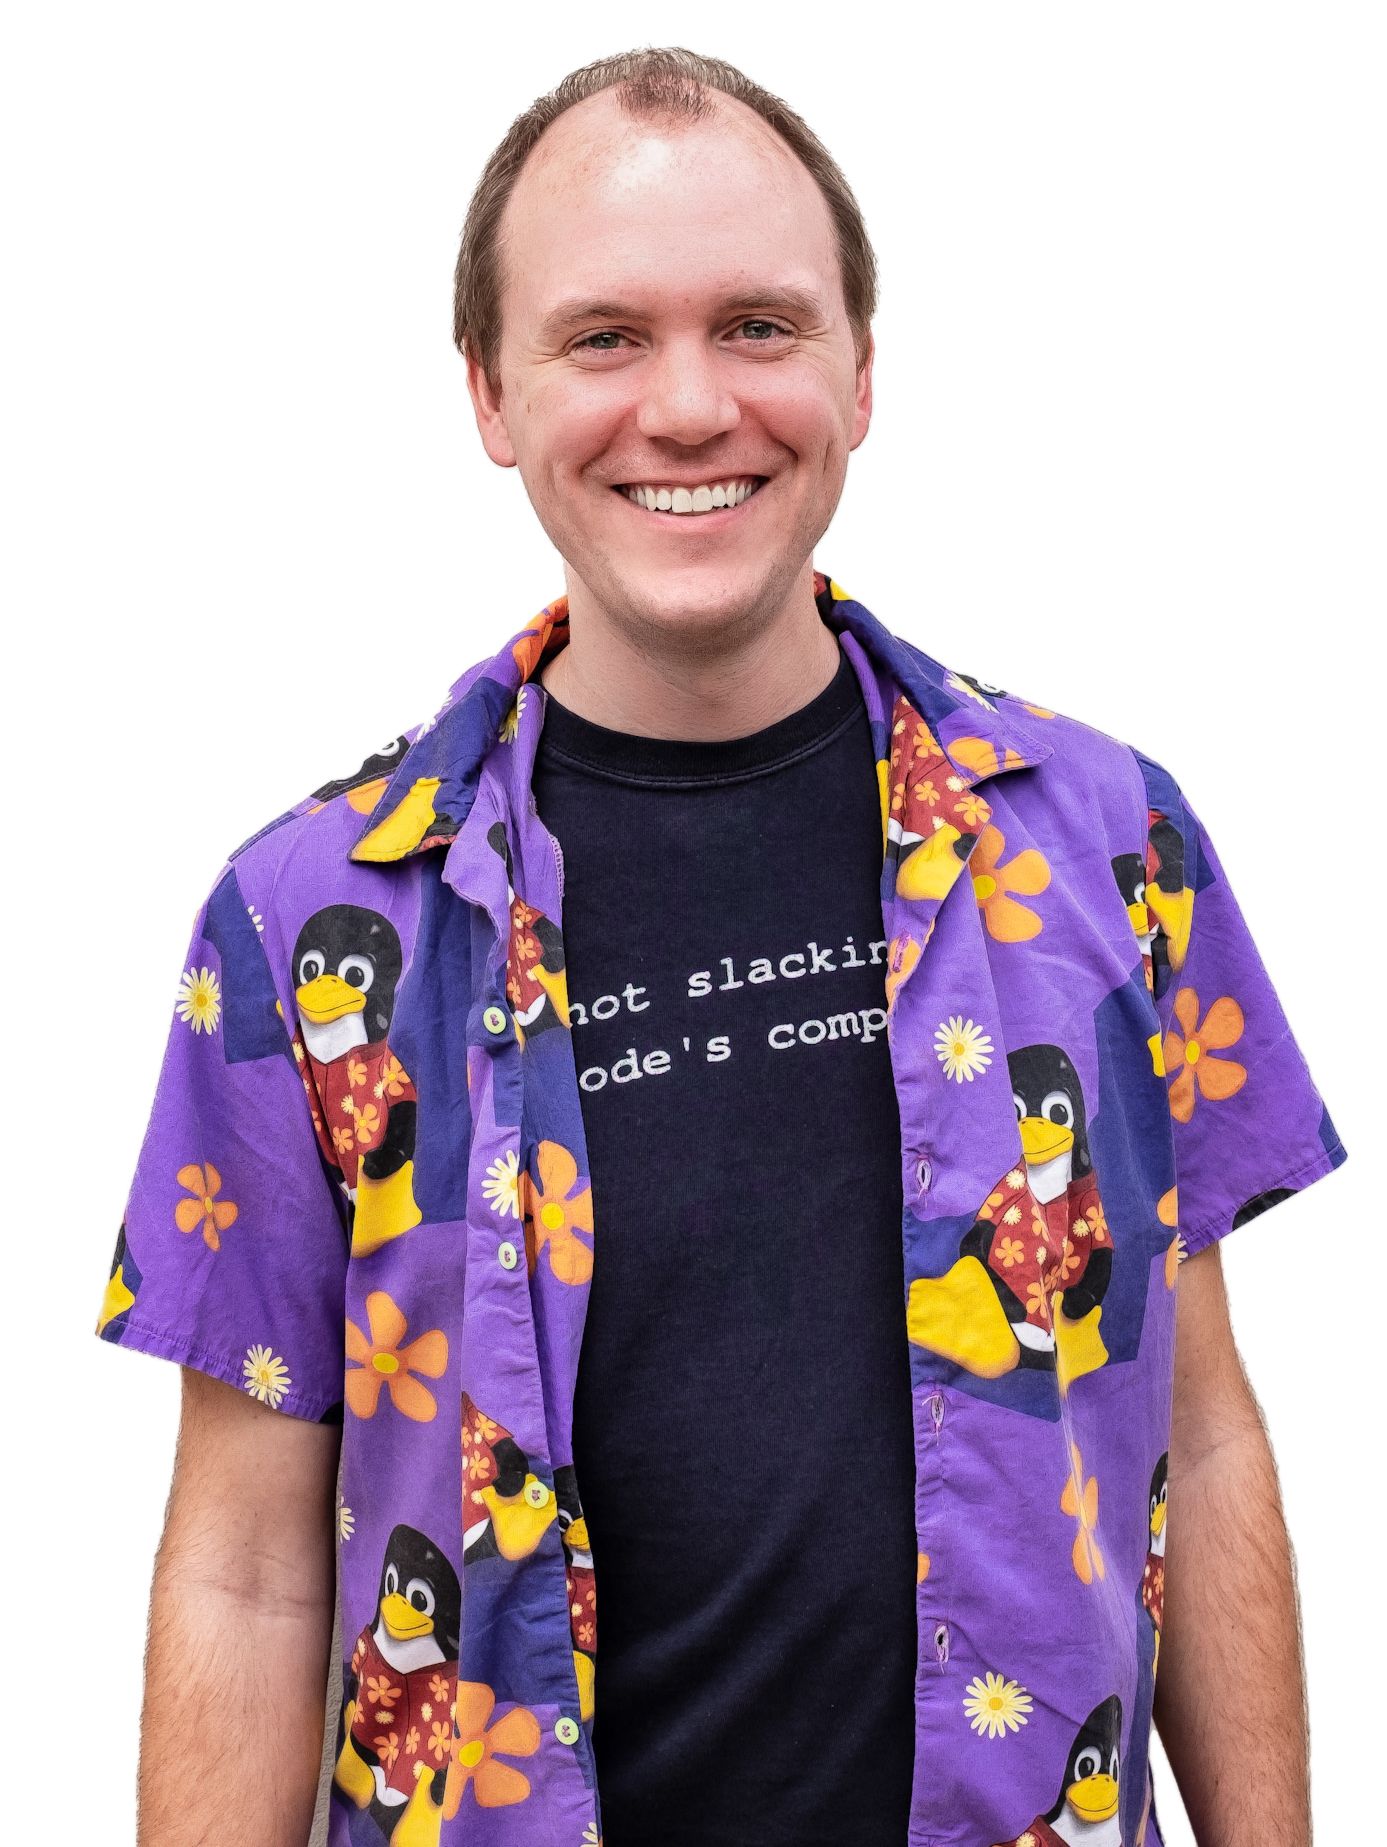 A photo of Matt DeKrey, smiling and wearing an aloha-style shirt. The print of the shirt is a pattern with Tux wearing an floral aloha-style shirt.